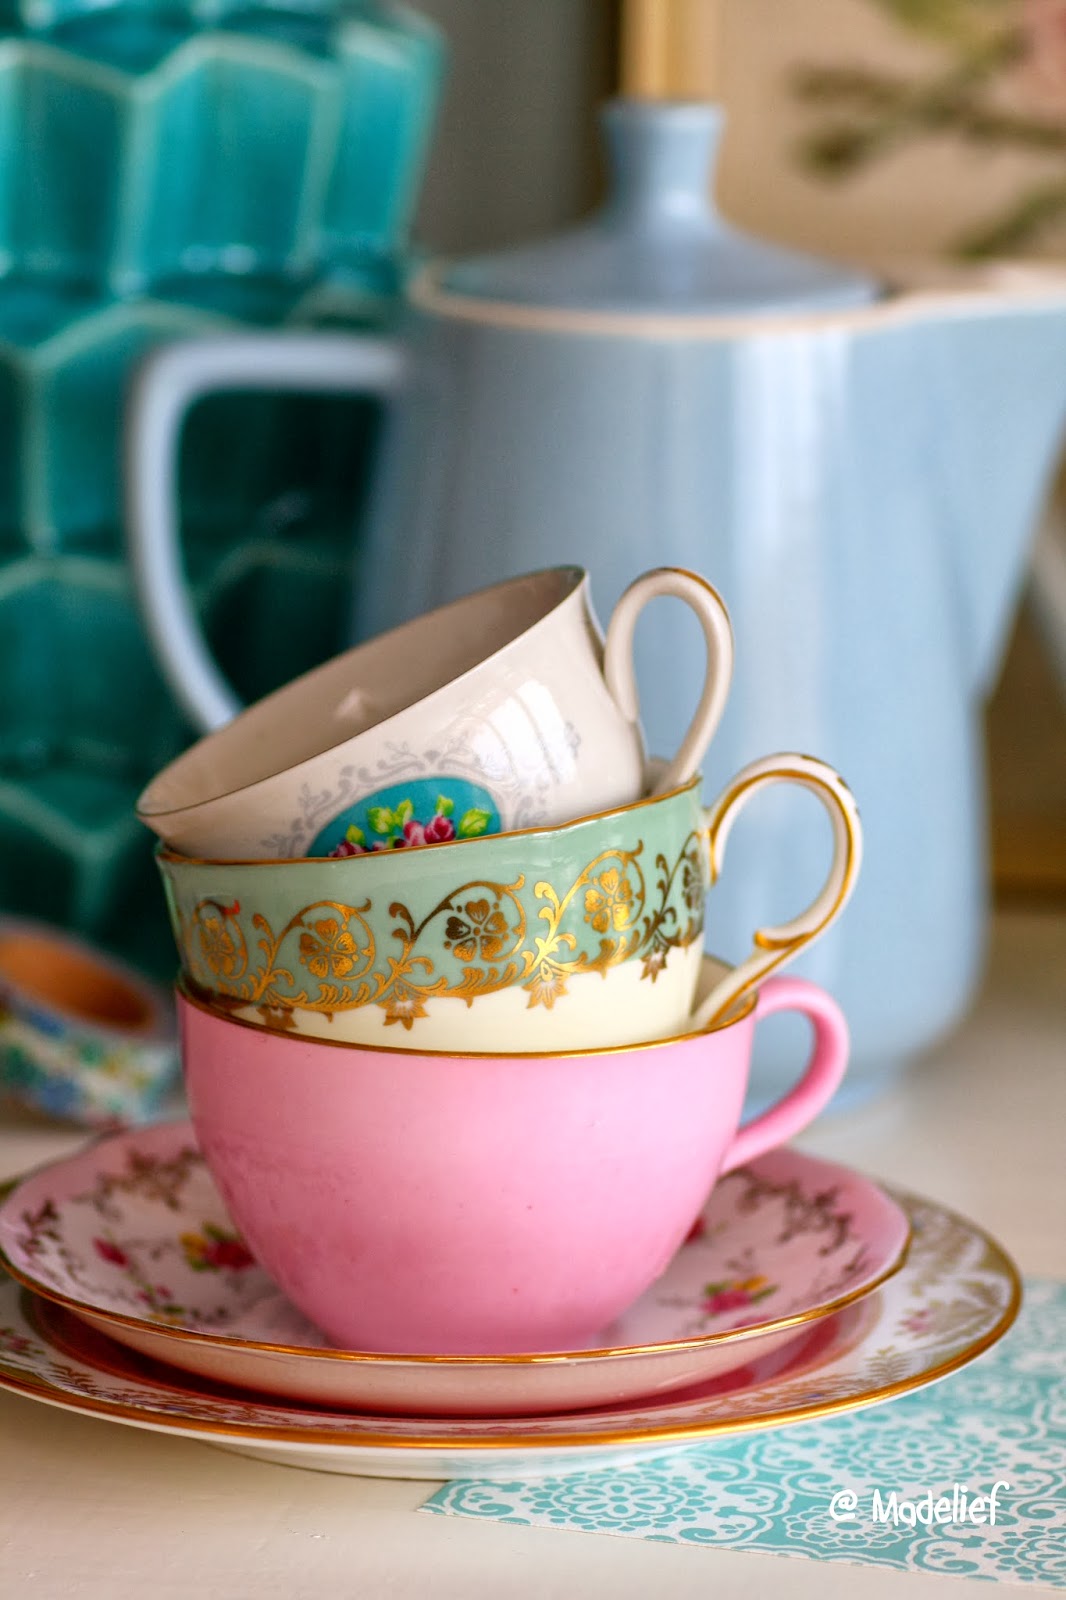 Madelief: Vintage tea cups & chocolate crackles